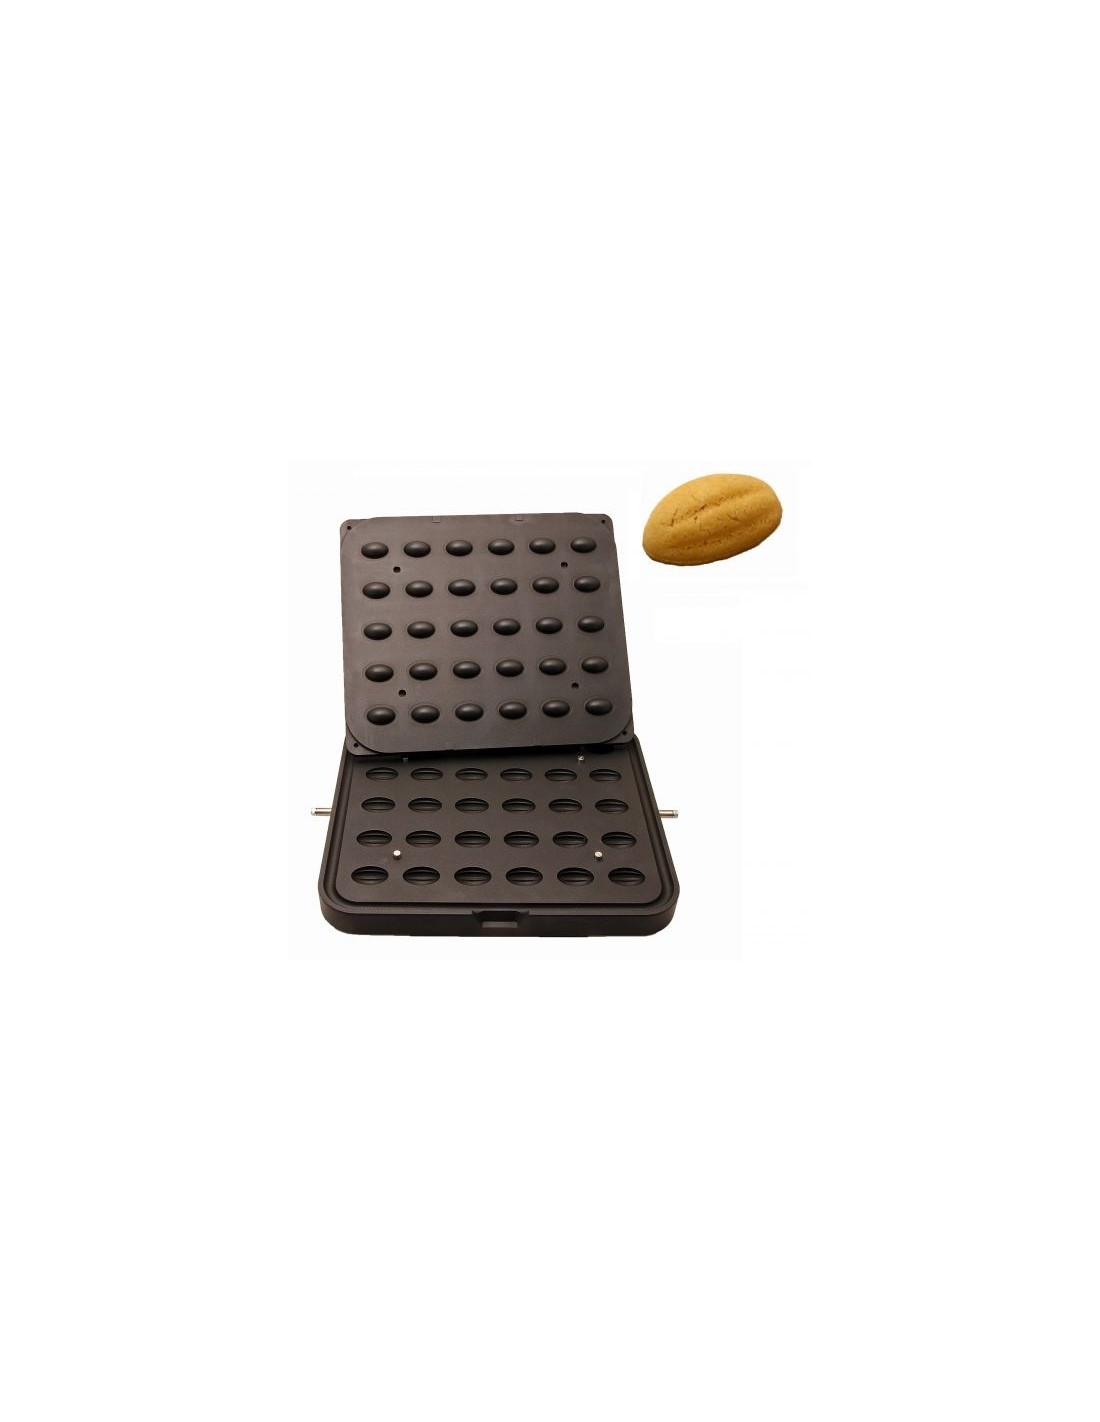 Smooth walnut plate - mm Ø sup 41 x 28 - h 15 - side 3 - bottom 4 -Imponte 30